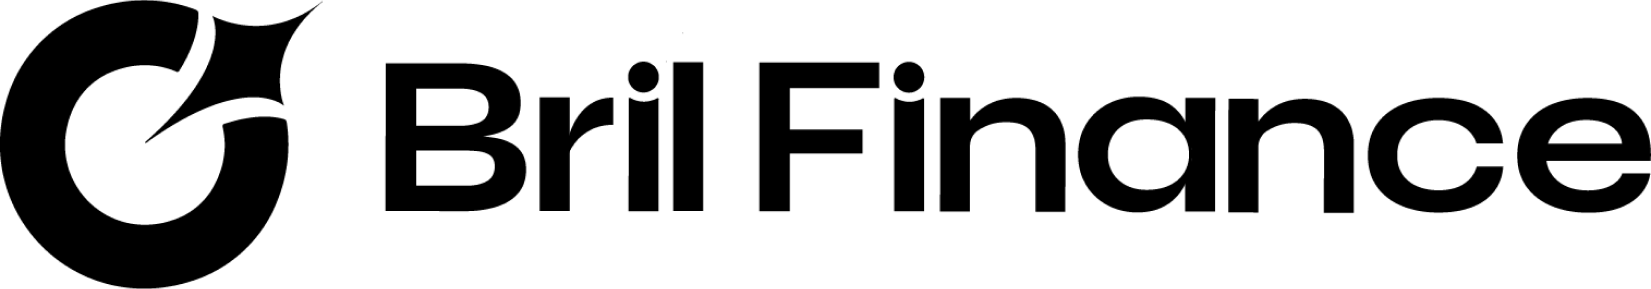 Bril logo